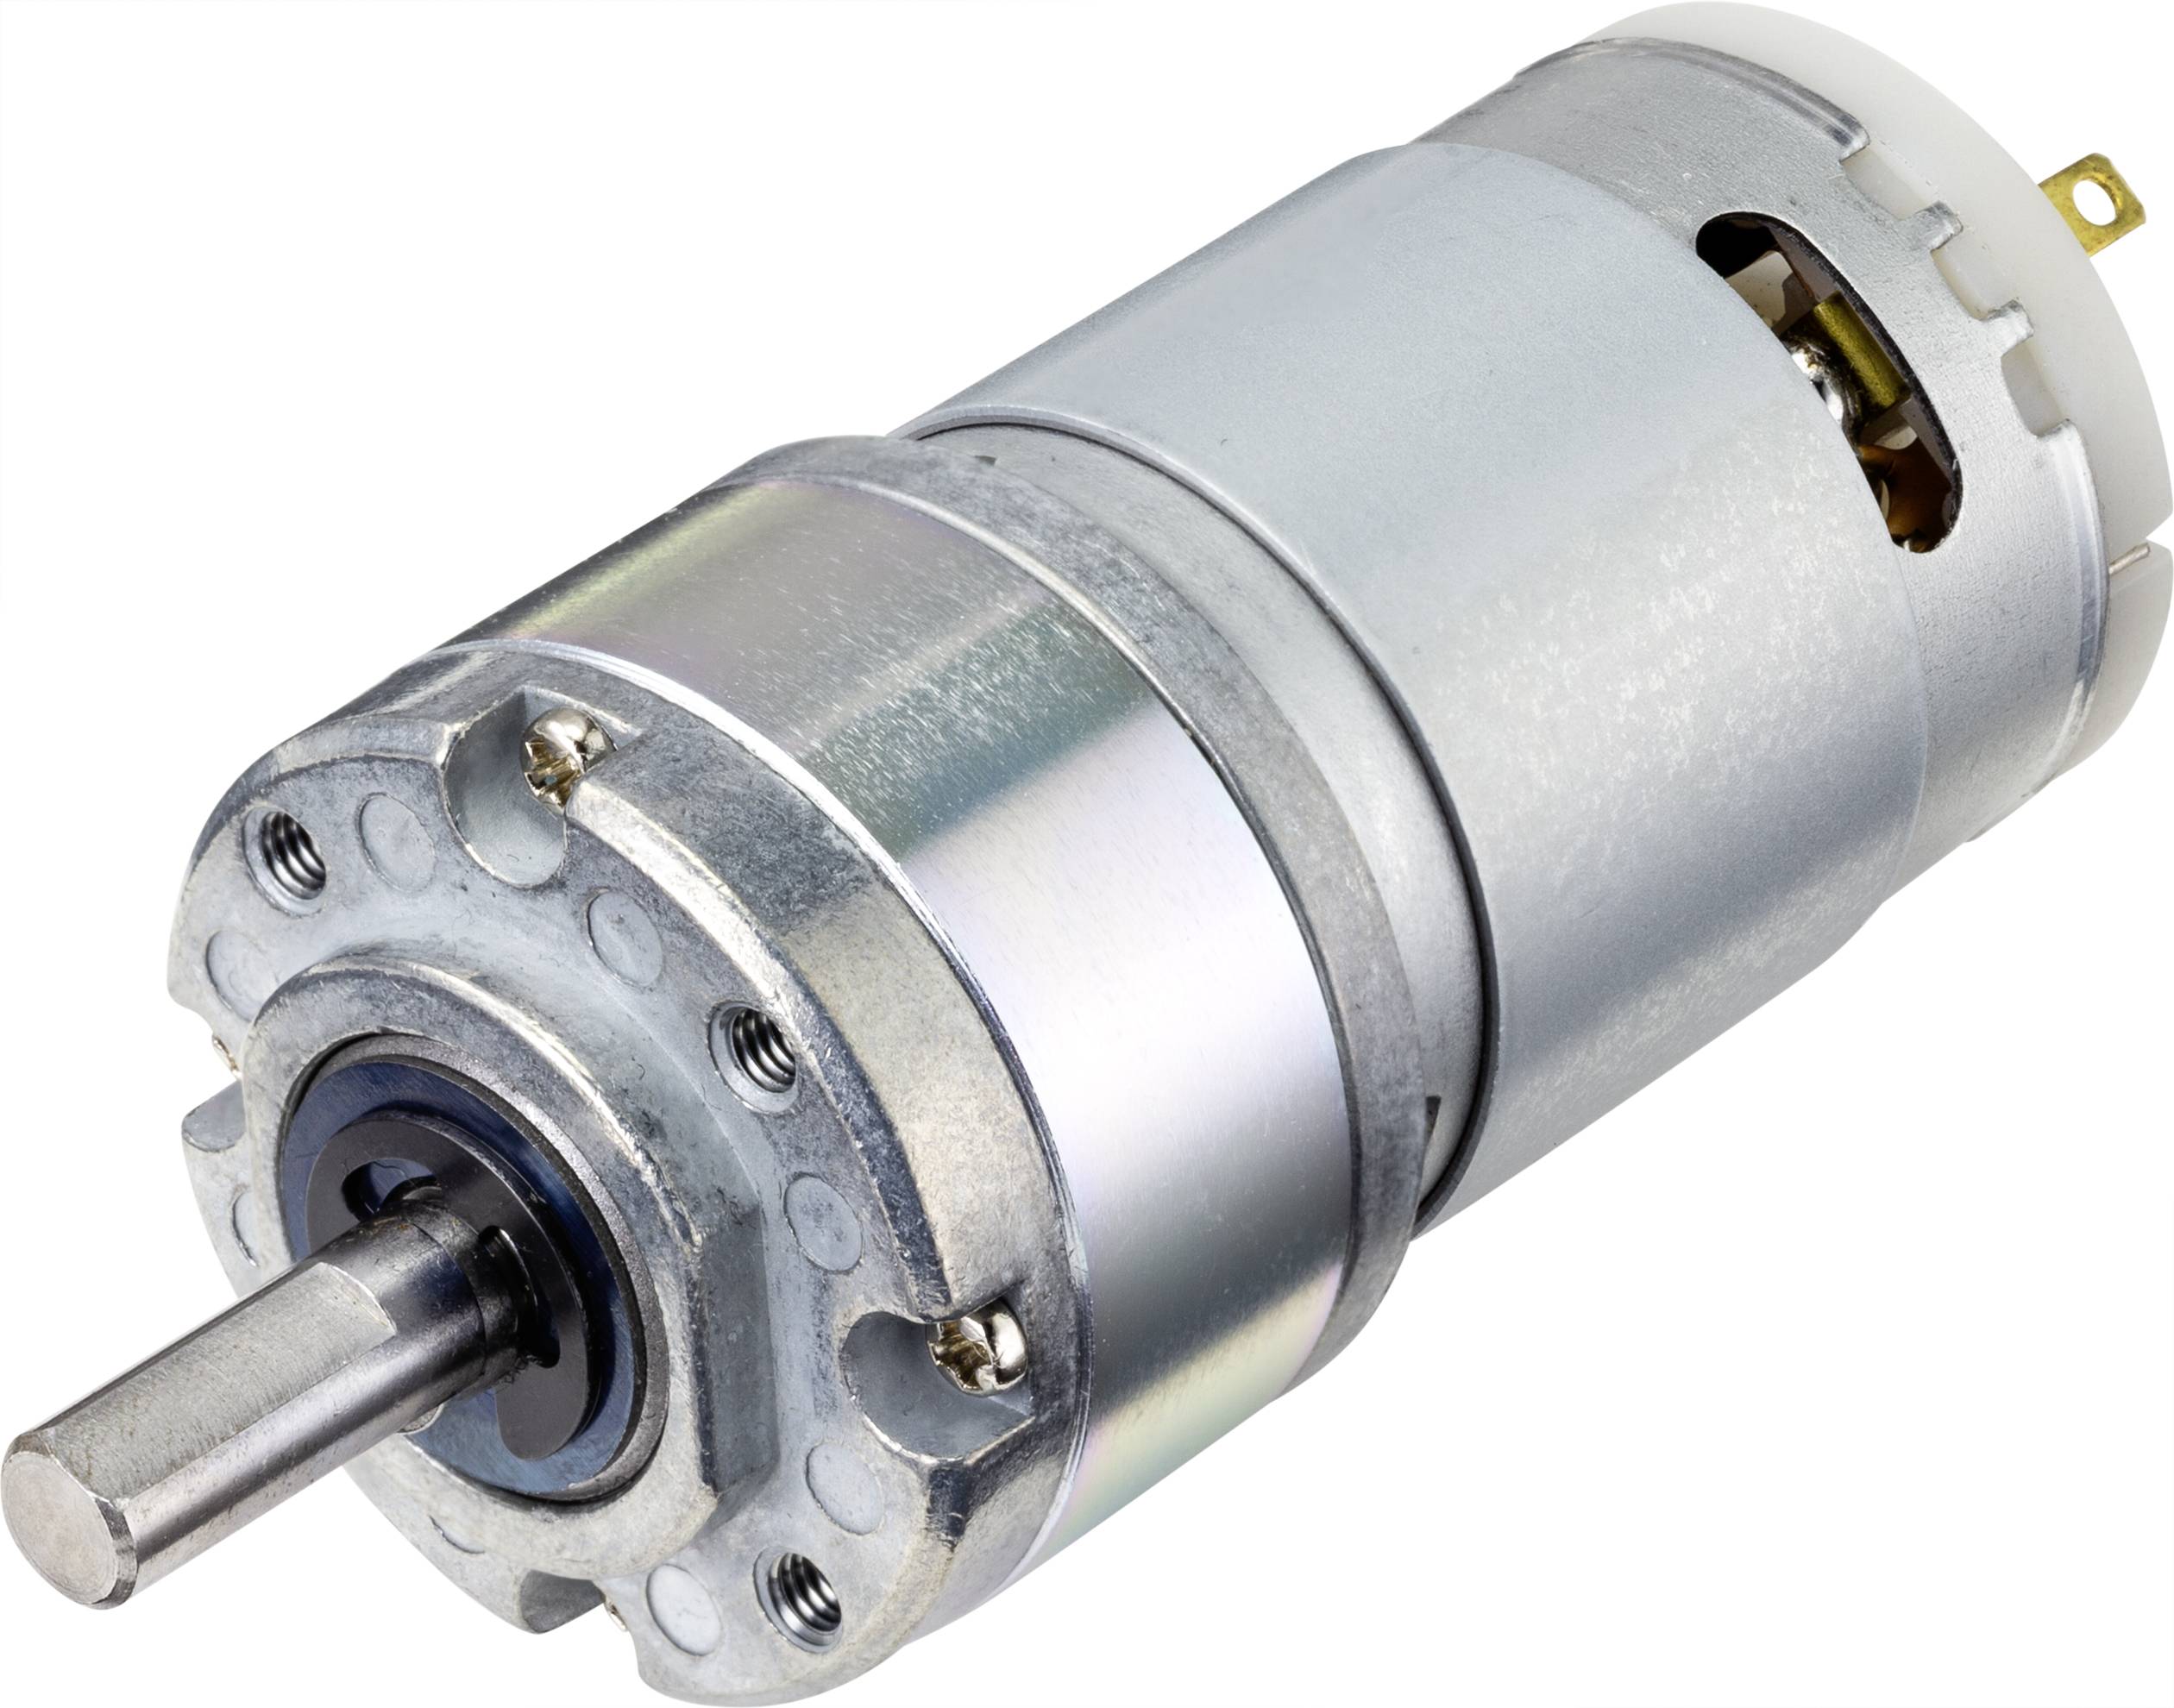 TRU COMPONENTS Gleichstrom-Getriebemotor 24 V 250 mA 0.02941995 Nm 990 U/min Wellen-Durchmesser